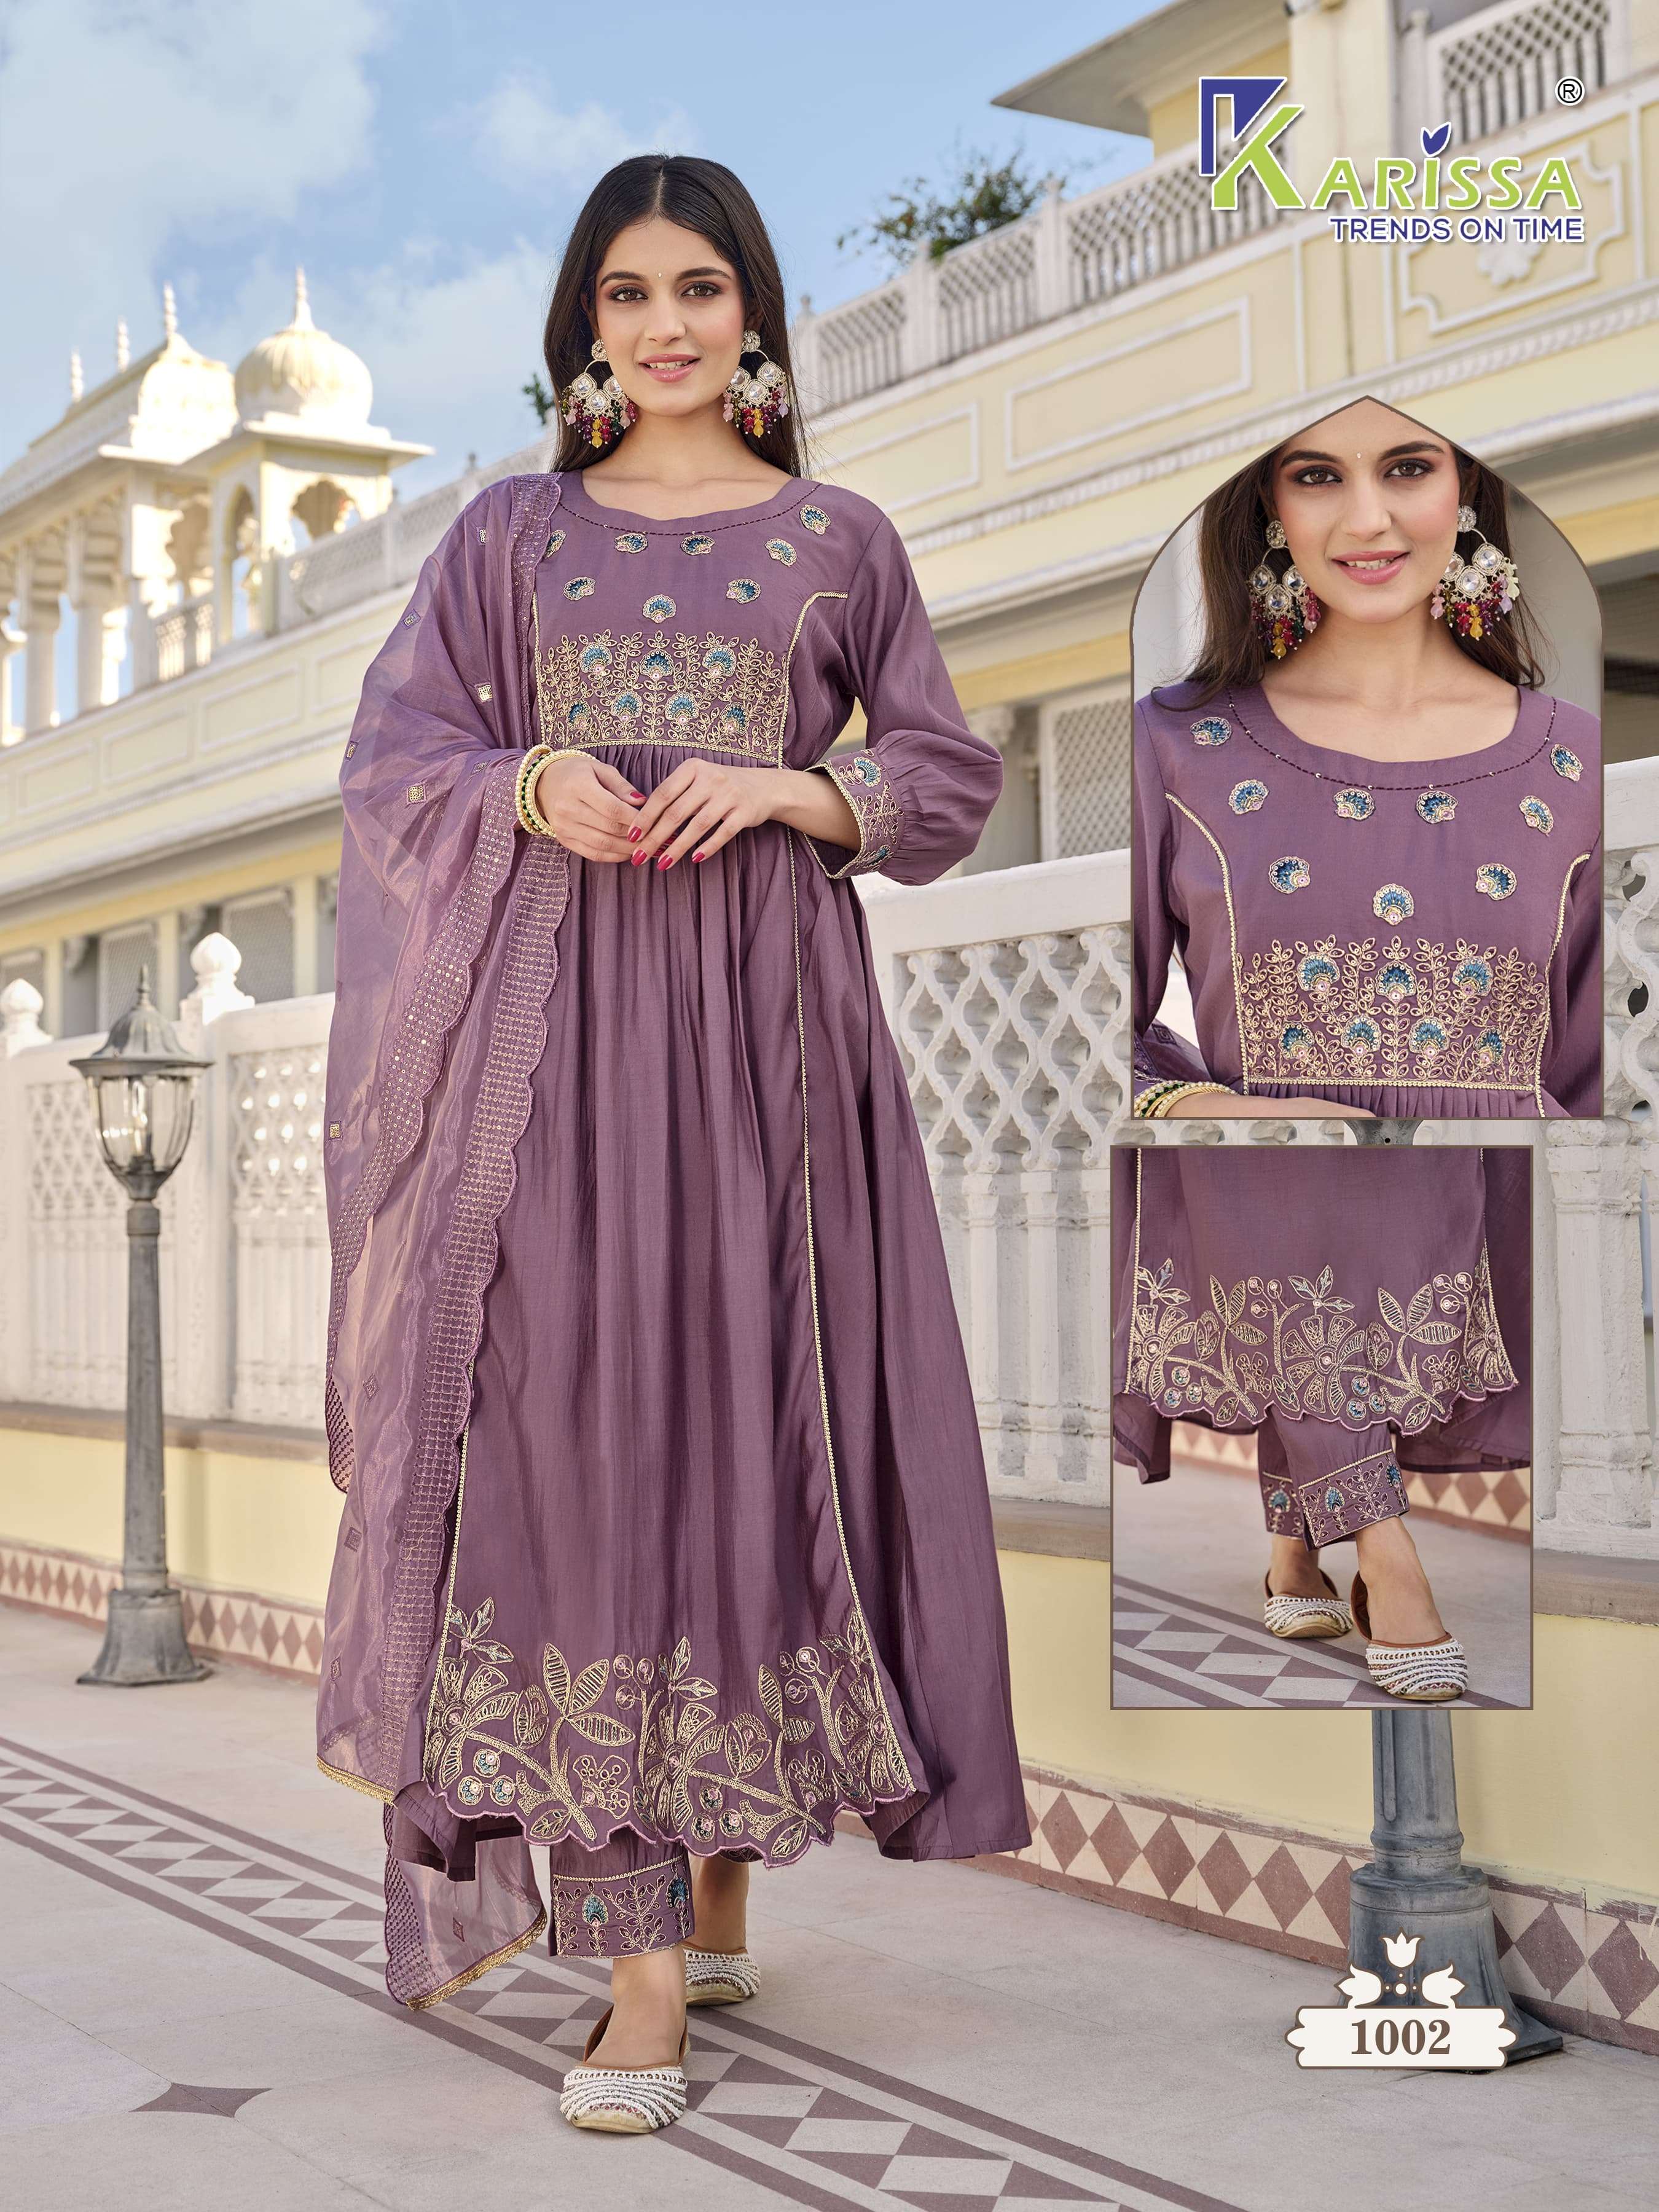 karissa trends kalisha 1001-1005 series designer party wear kurti set wholesaler surat gujarat